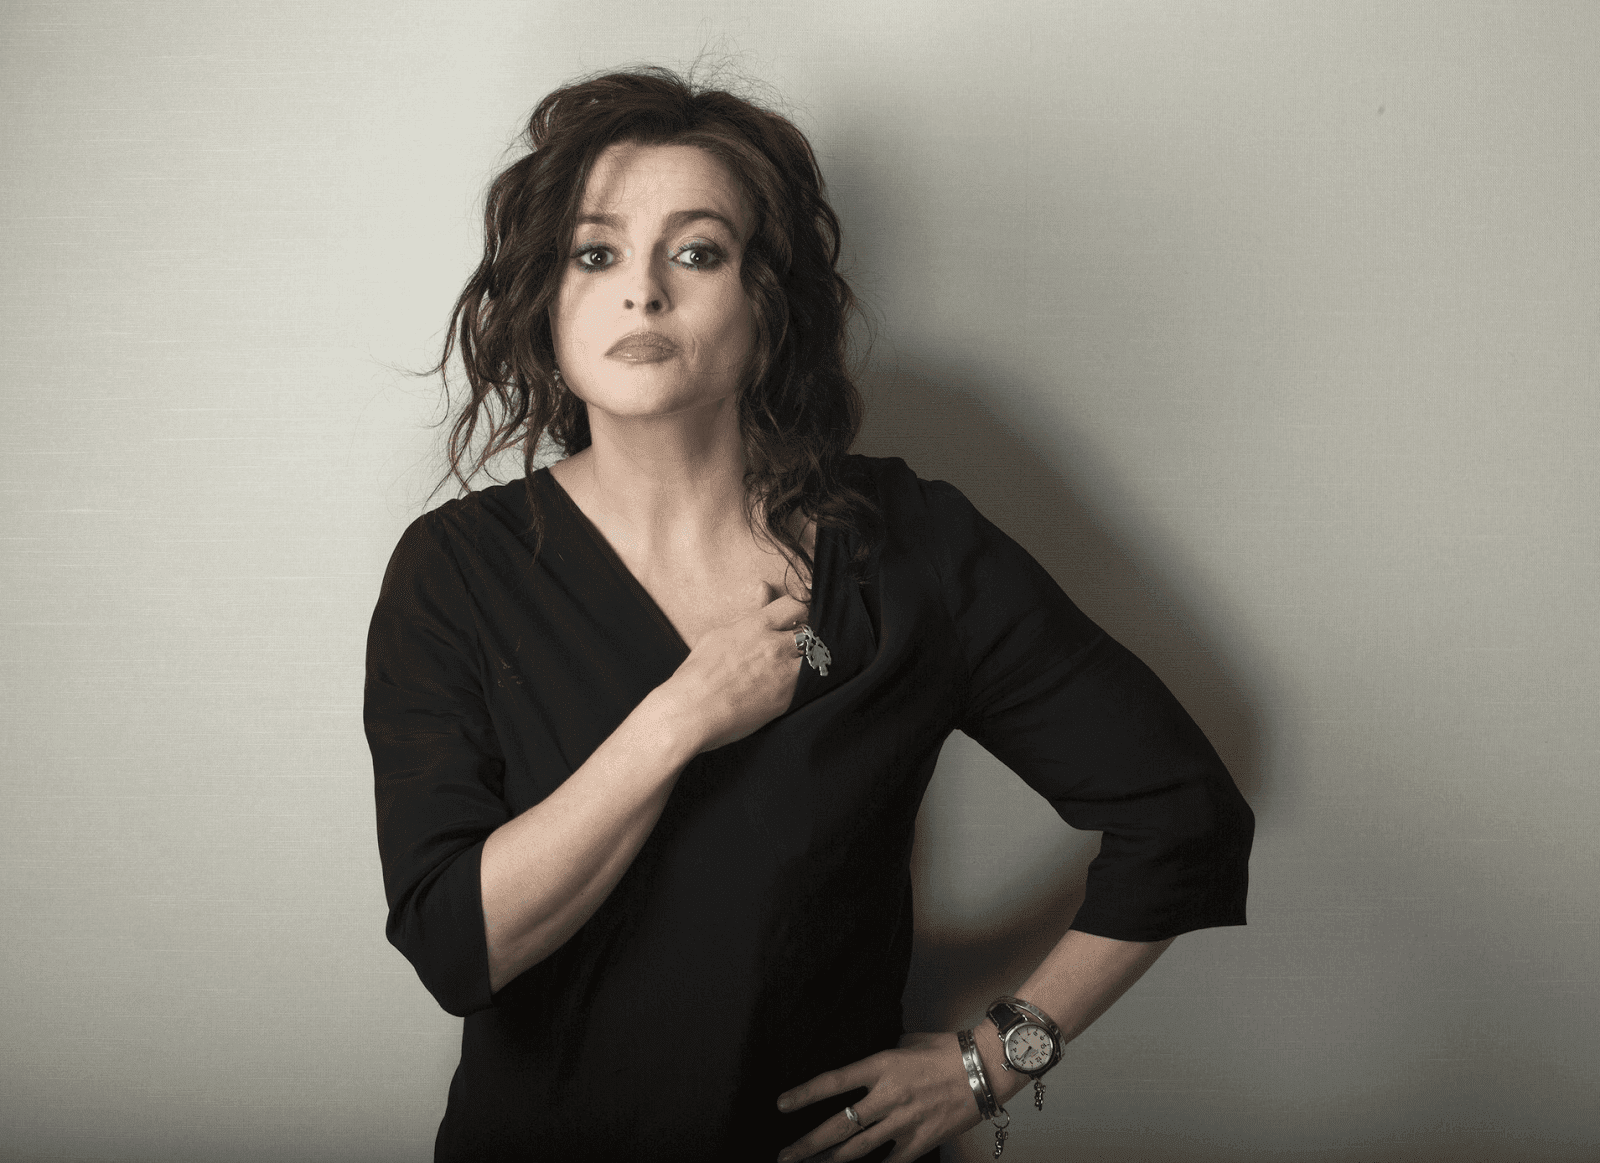 Helena Bonham Carter Wallpaper